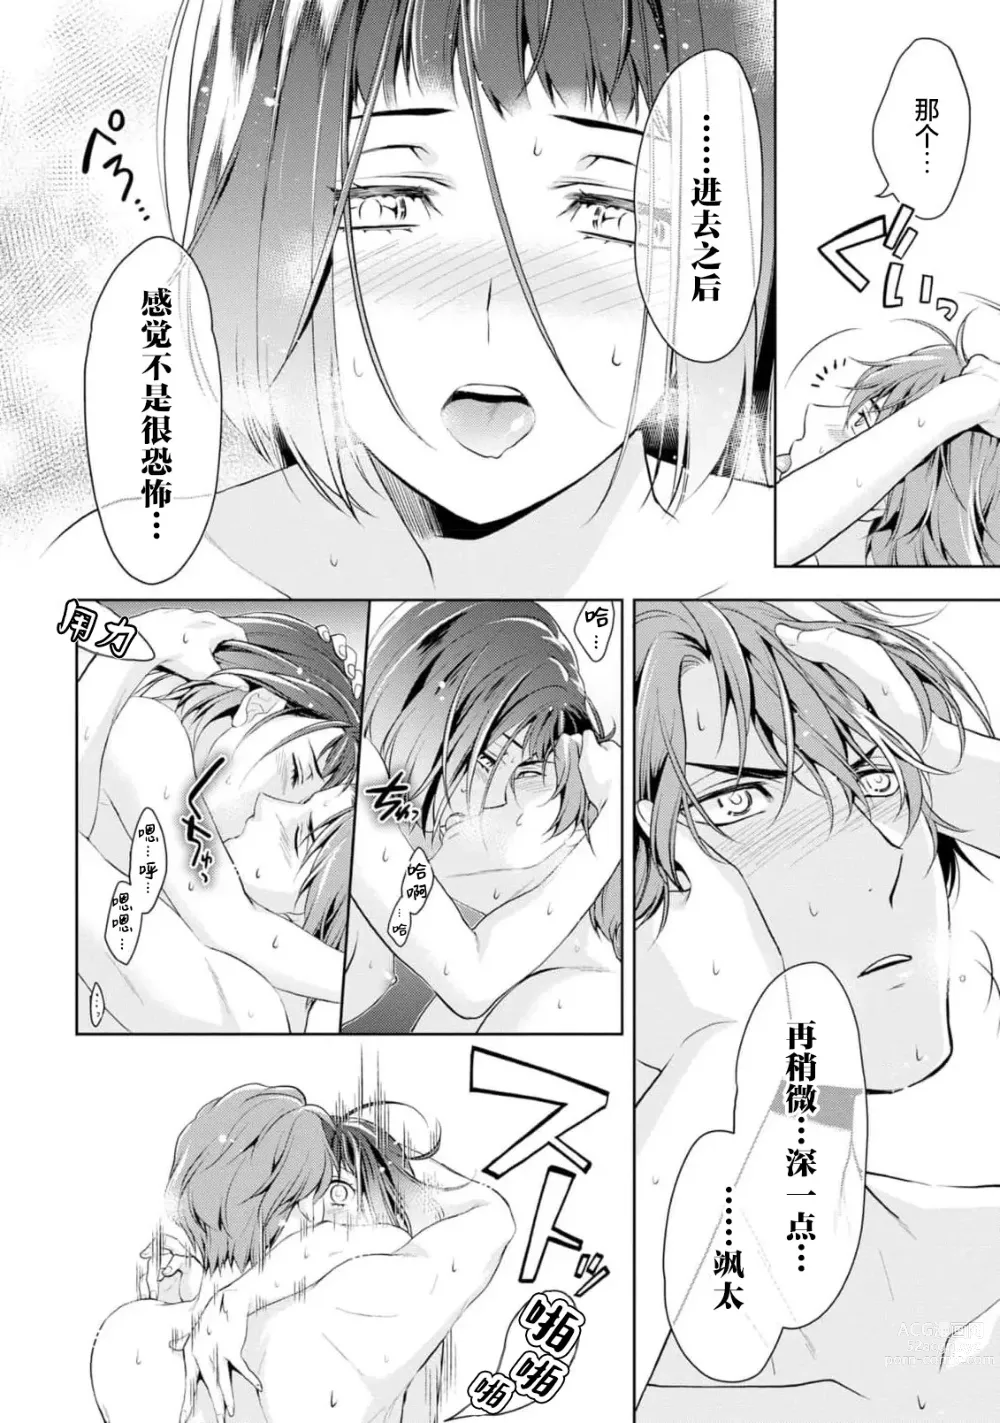 Page 135 of manga 消极小姐和乐观先生~触摸上司的那个并进行反击!?~ 1-5 + Extra